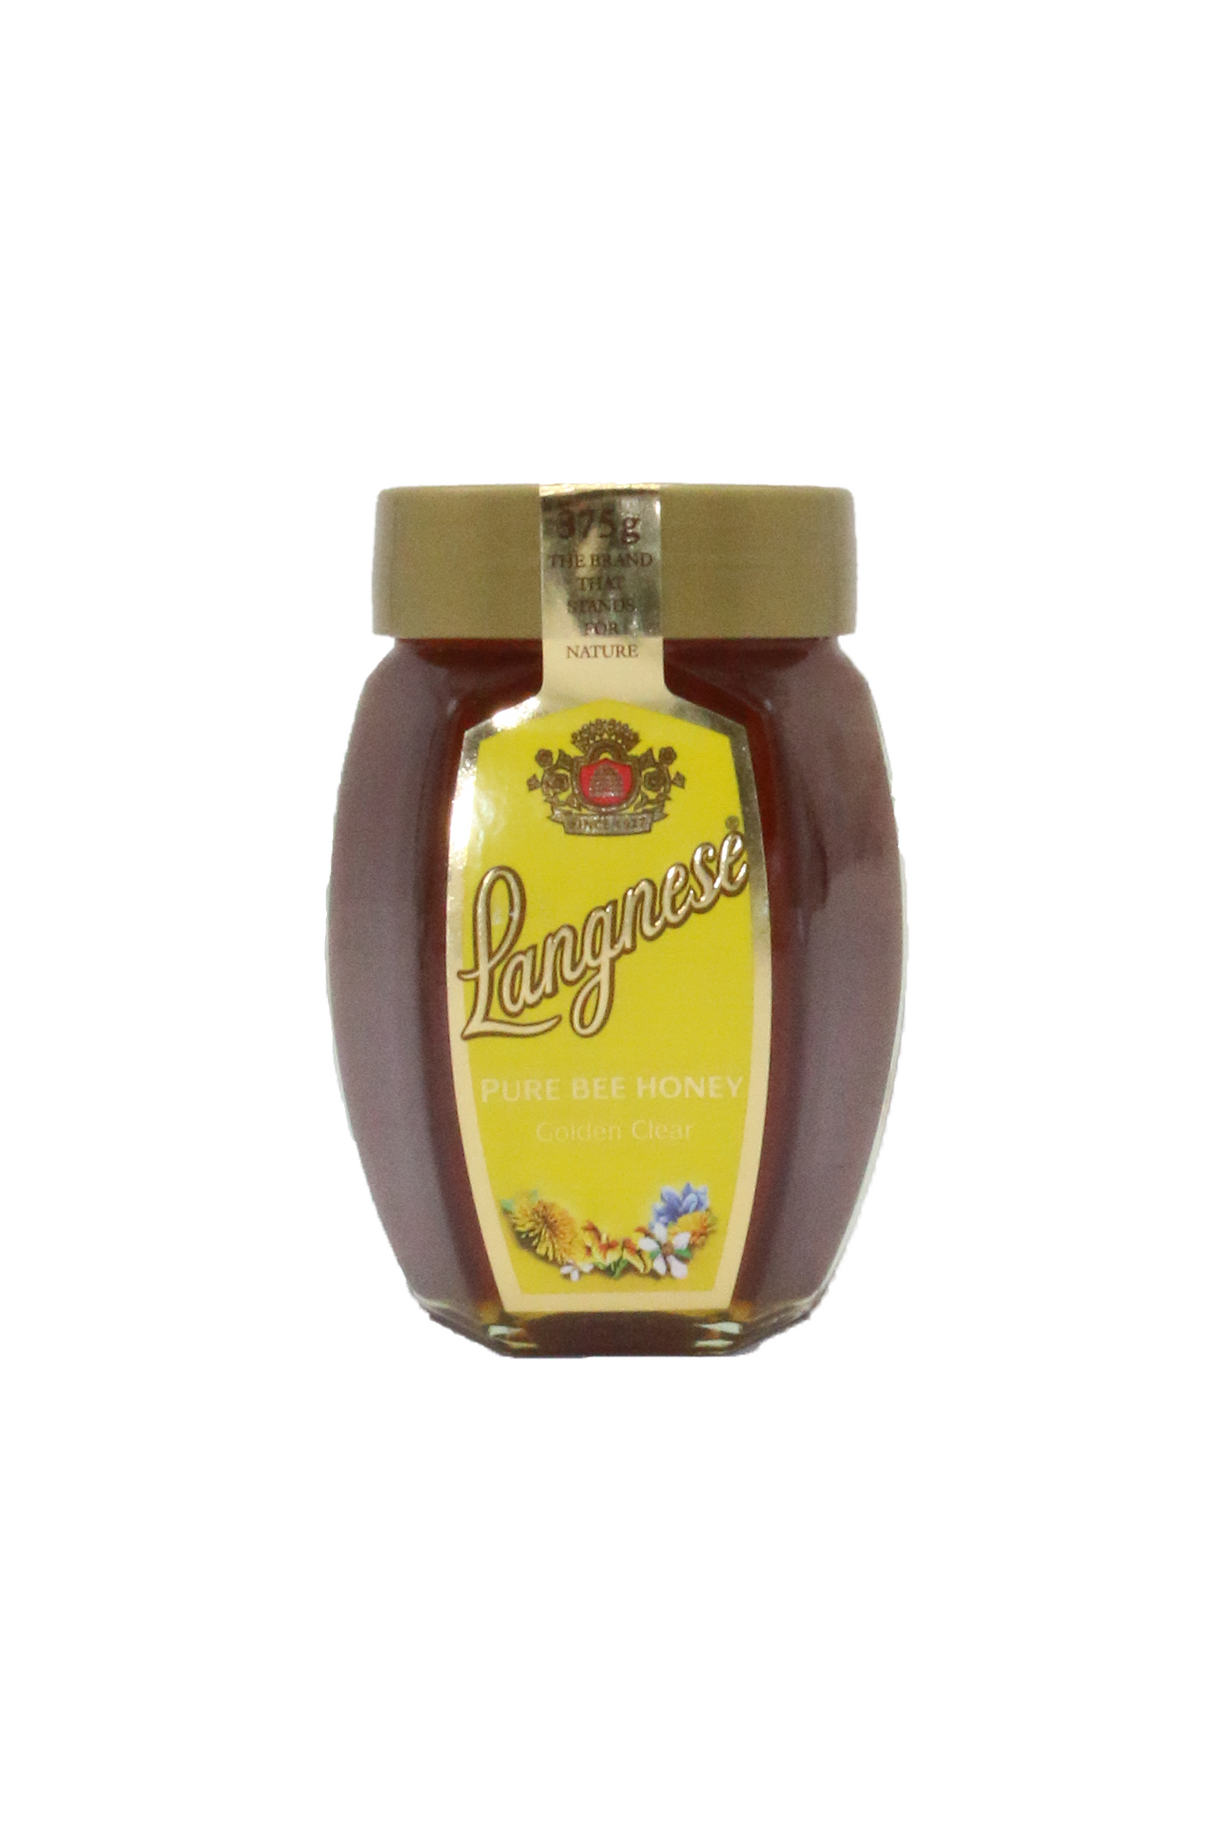 langnese honey golden clear 375g